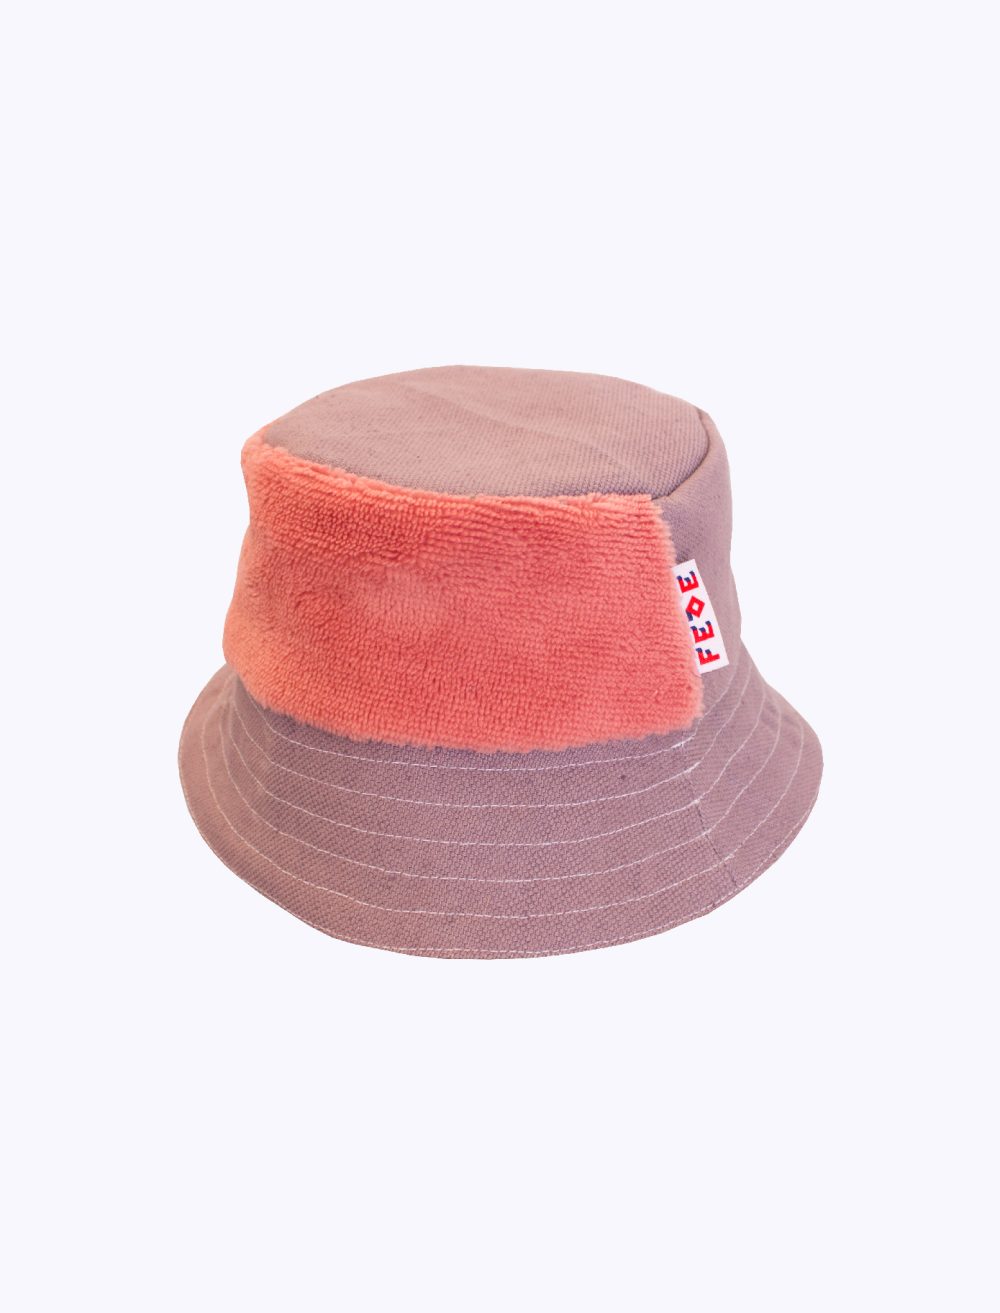 Patchwork Bucket Hat - Cappello da pescatore stile patchwork